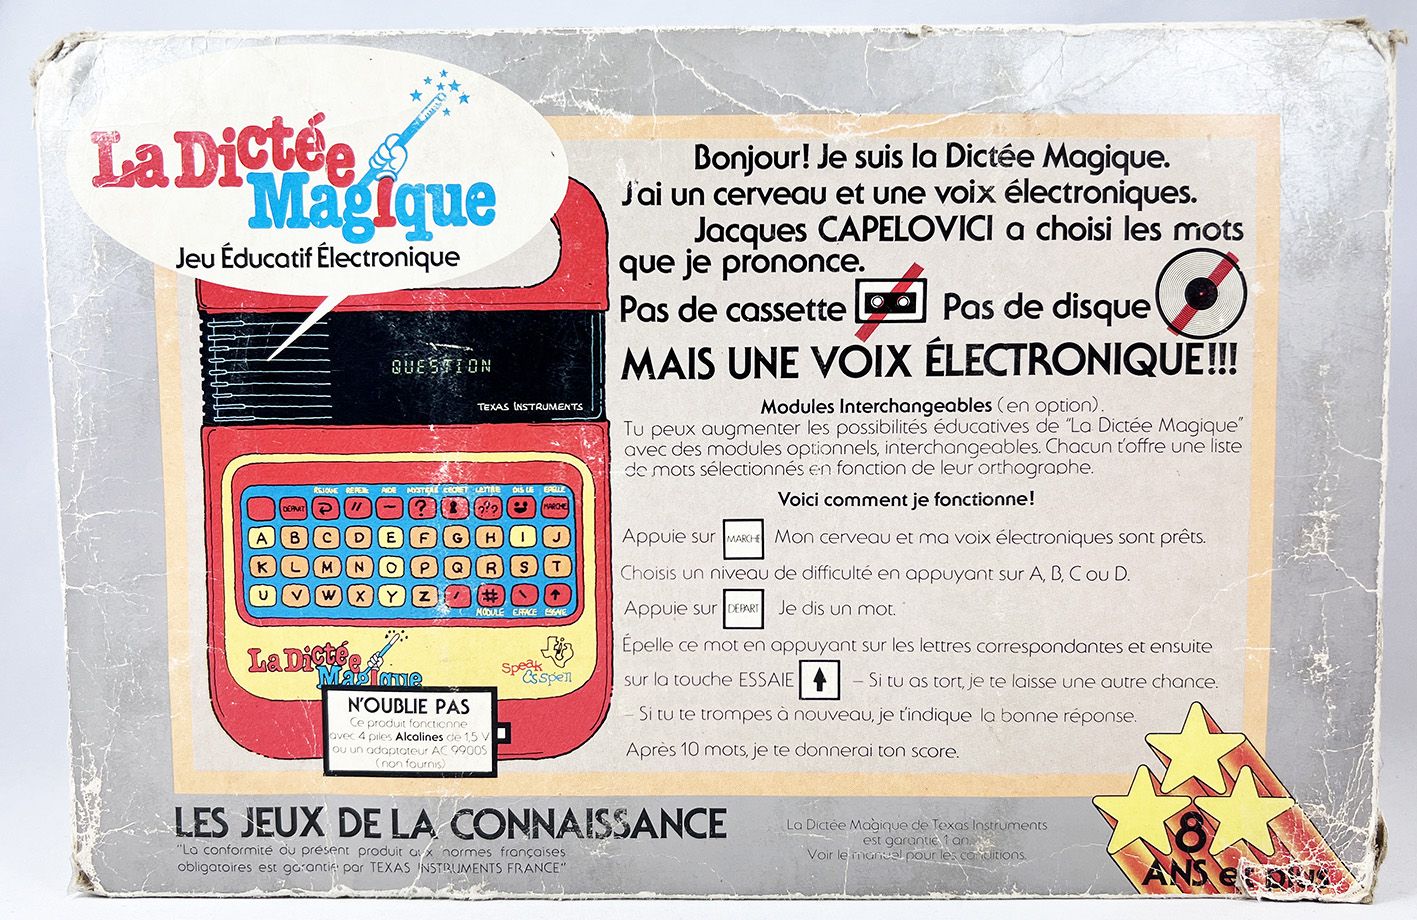 Texas Instruments - La Dictée Magique Electronique (1983